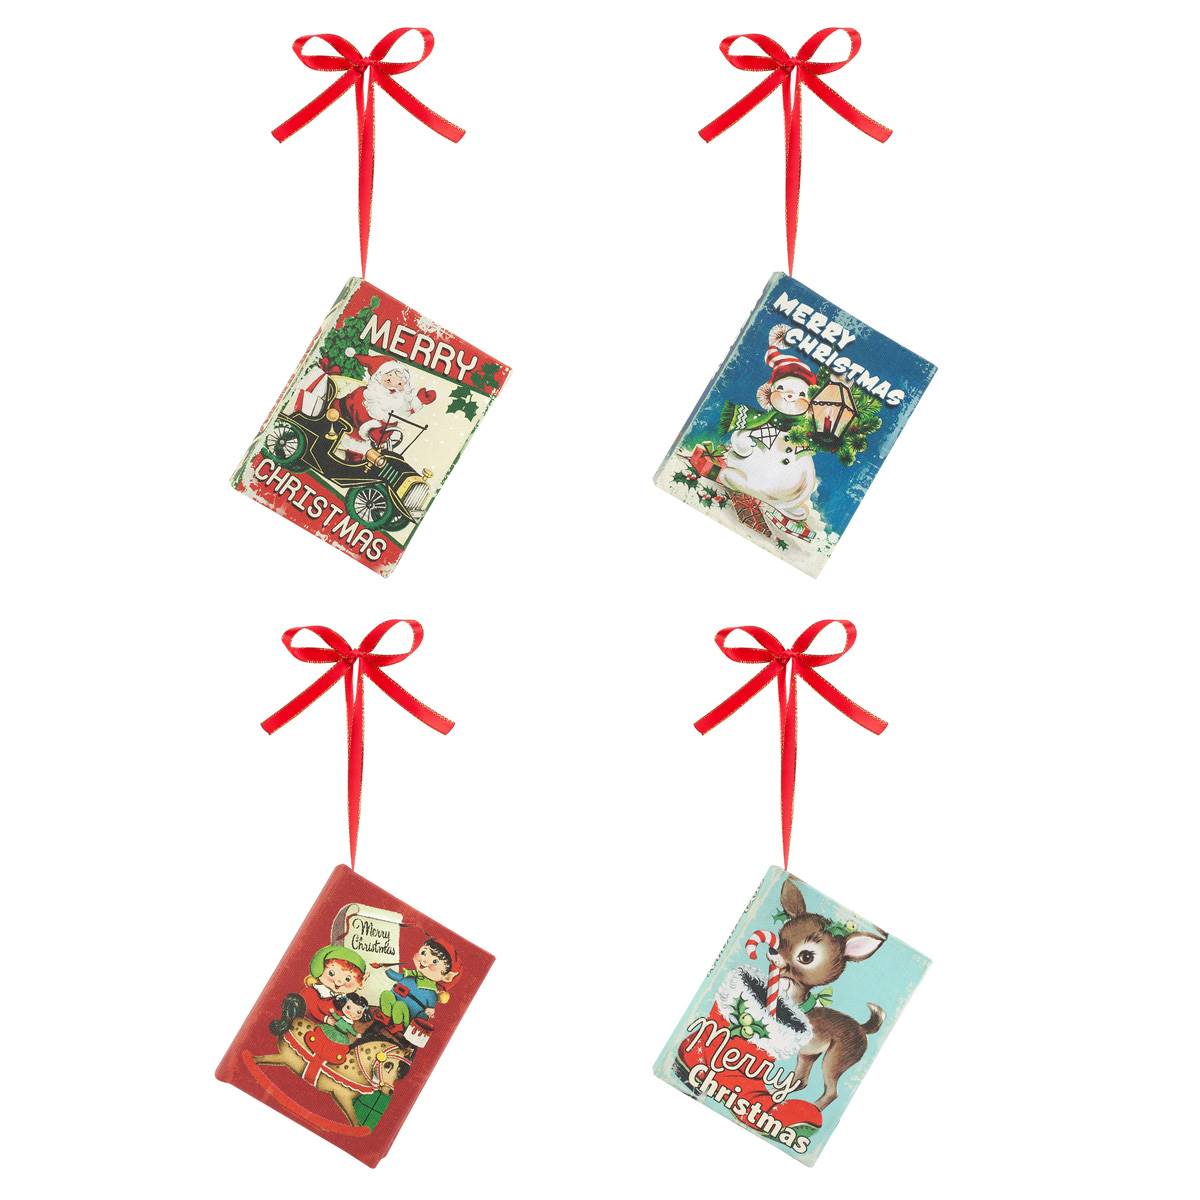 Mr. Christmas Set Of 4 Nostalgic Musical Songbook Ornaments